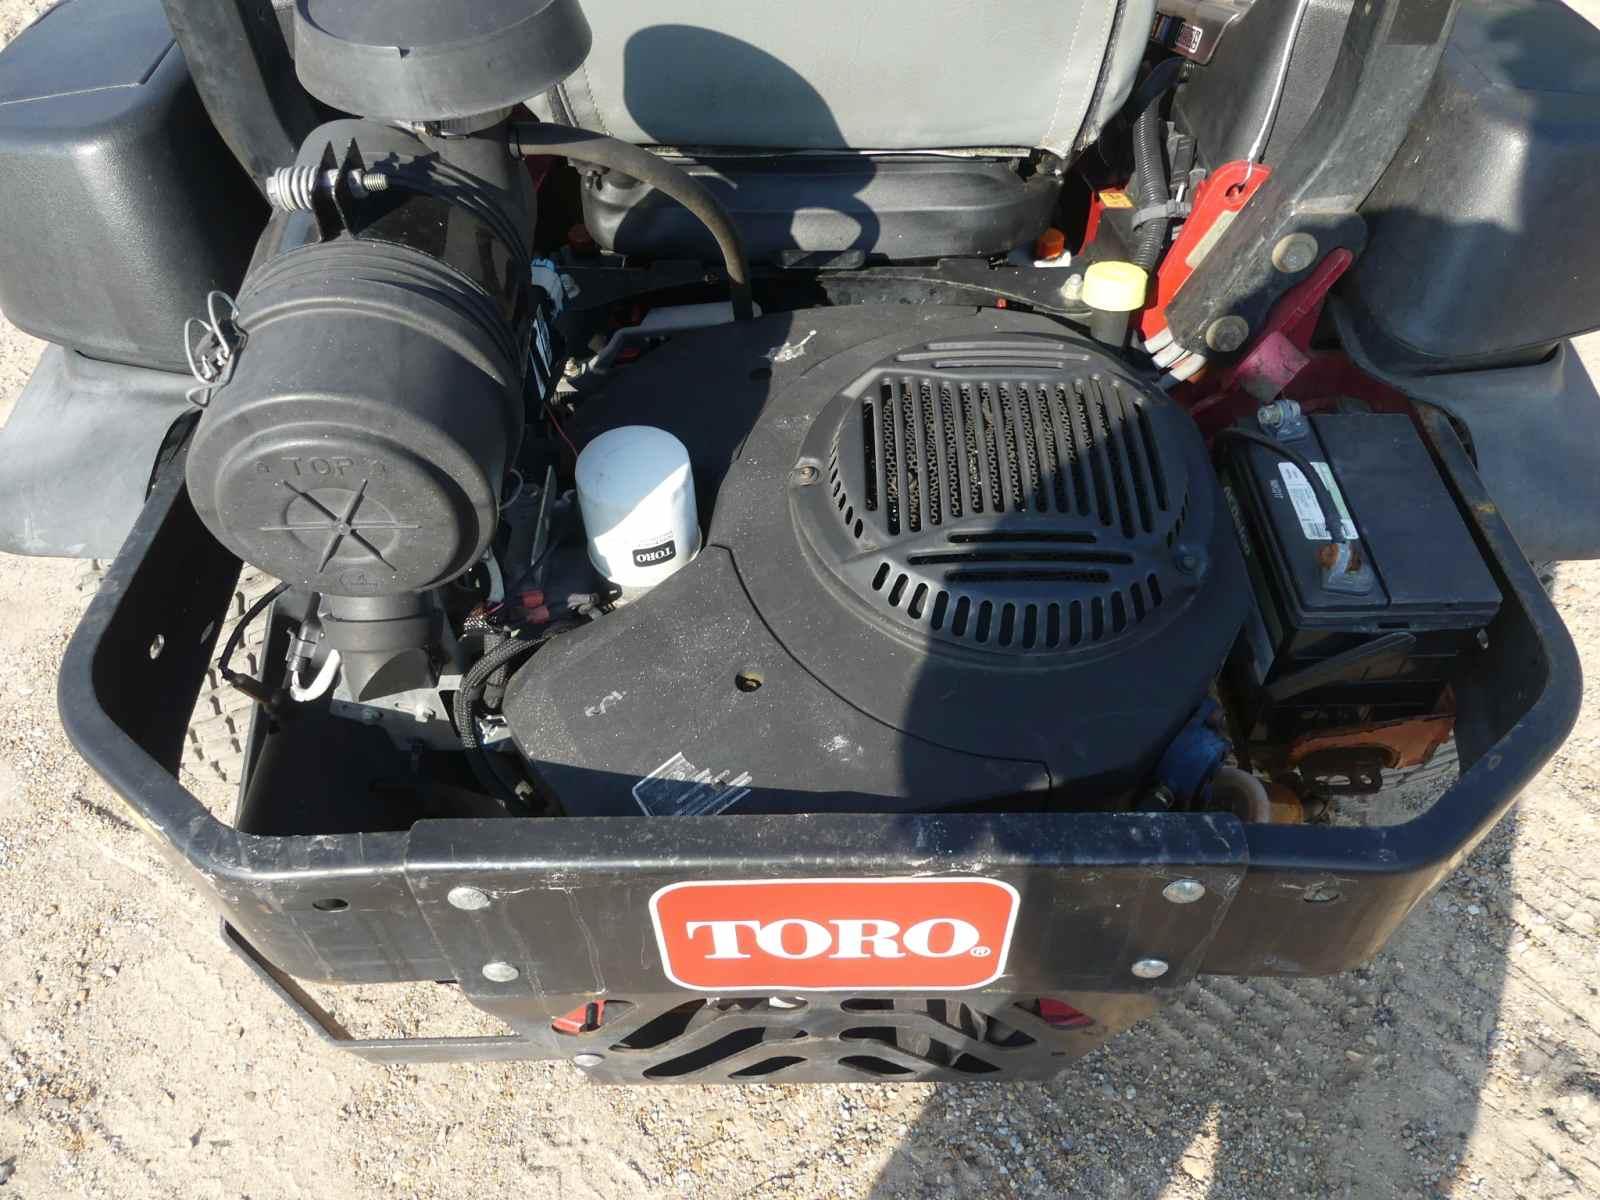 Toro 6000 Series Zero-turn Mower, s/n 316000317: Meter Shows 1726 hrs